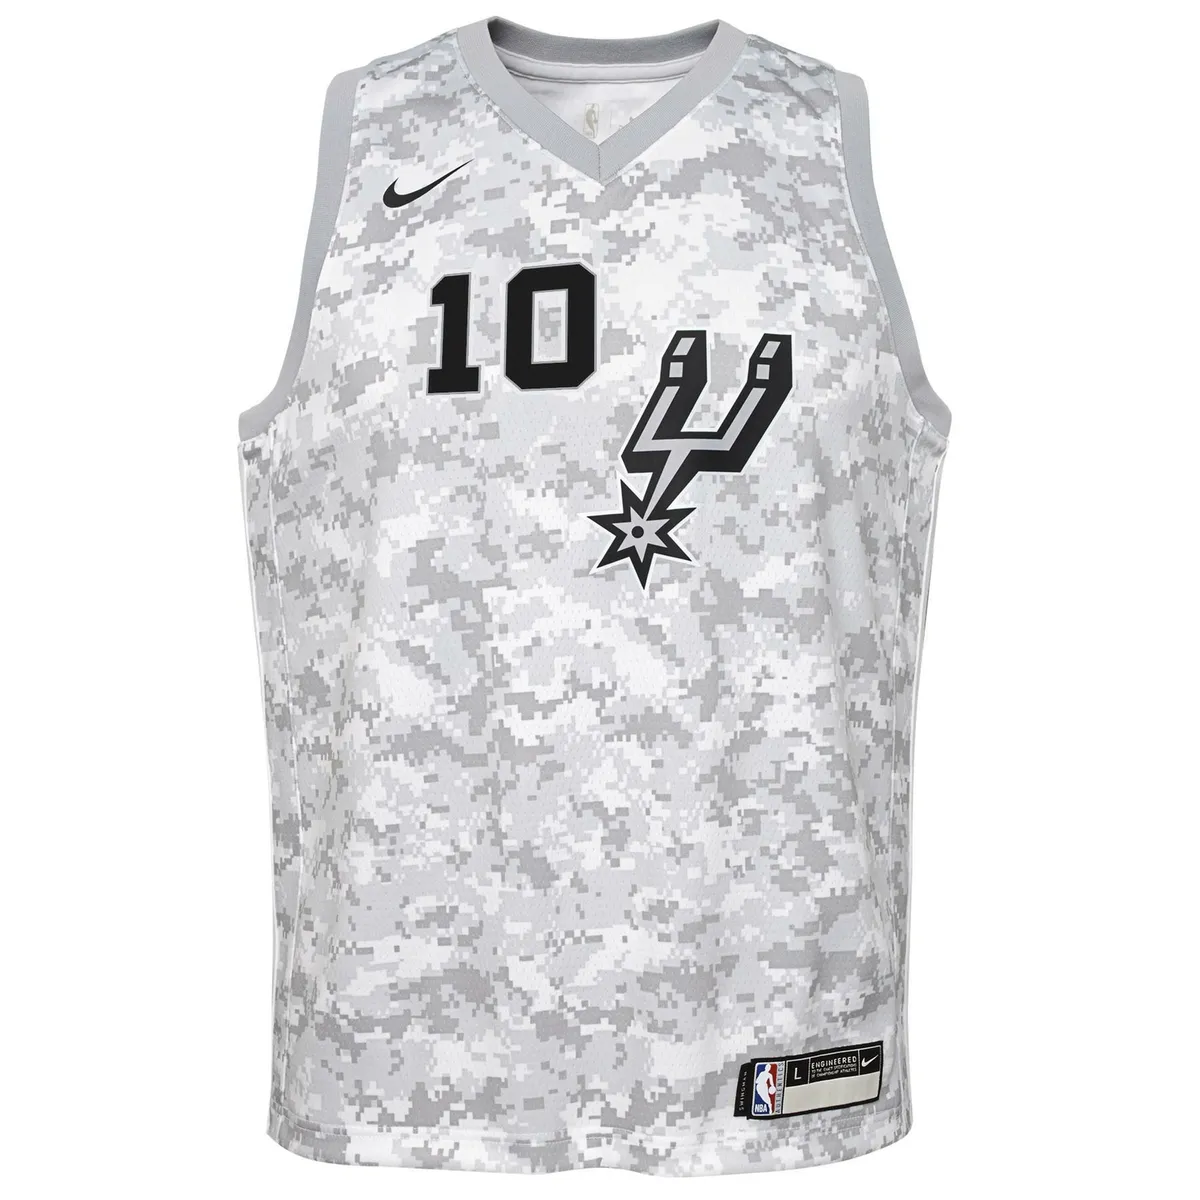 San Antonio Spurs City Edition Men's Nike NBA Logo T-Shirt.